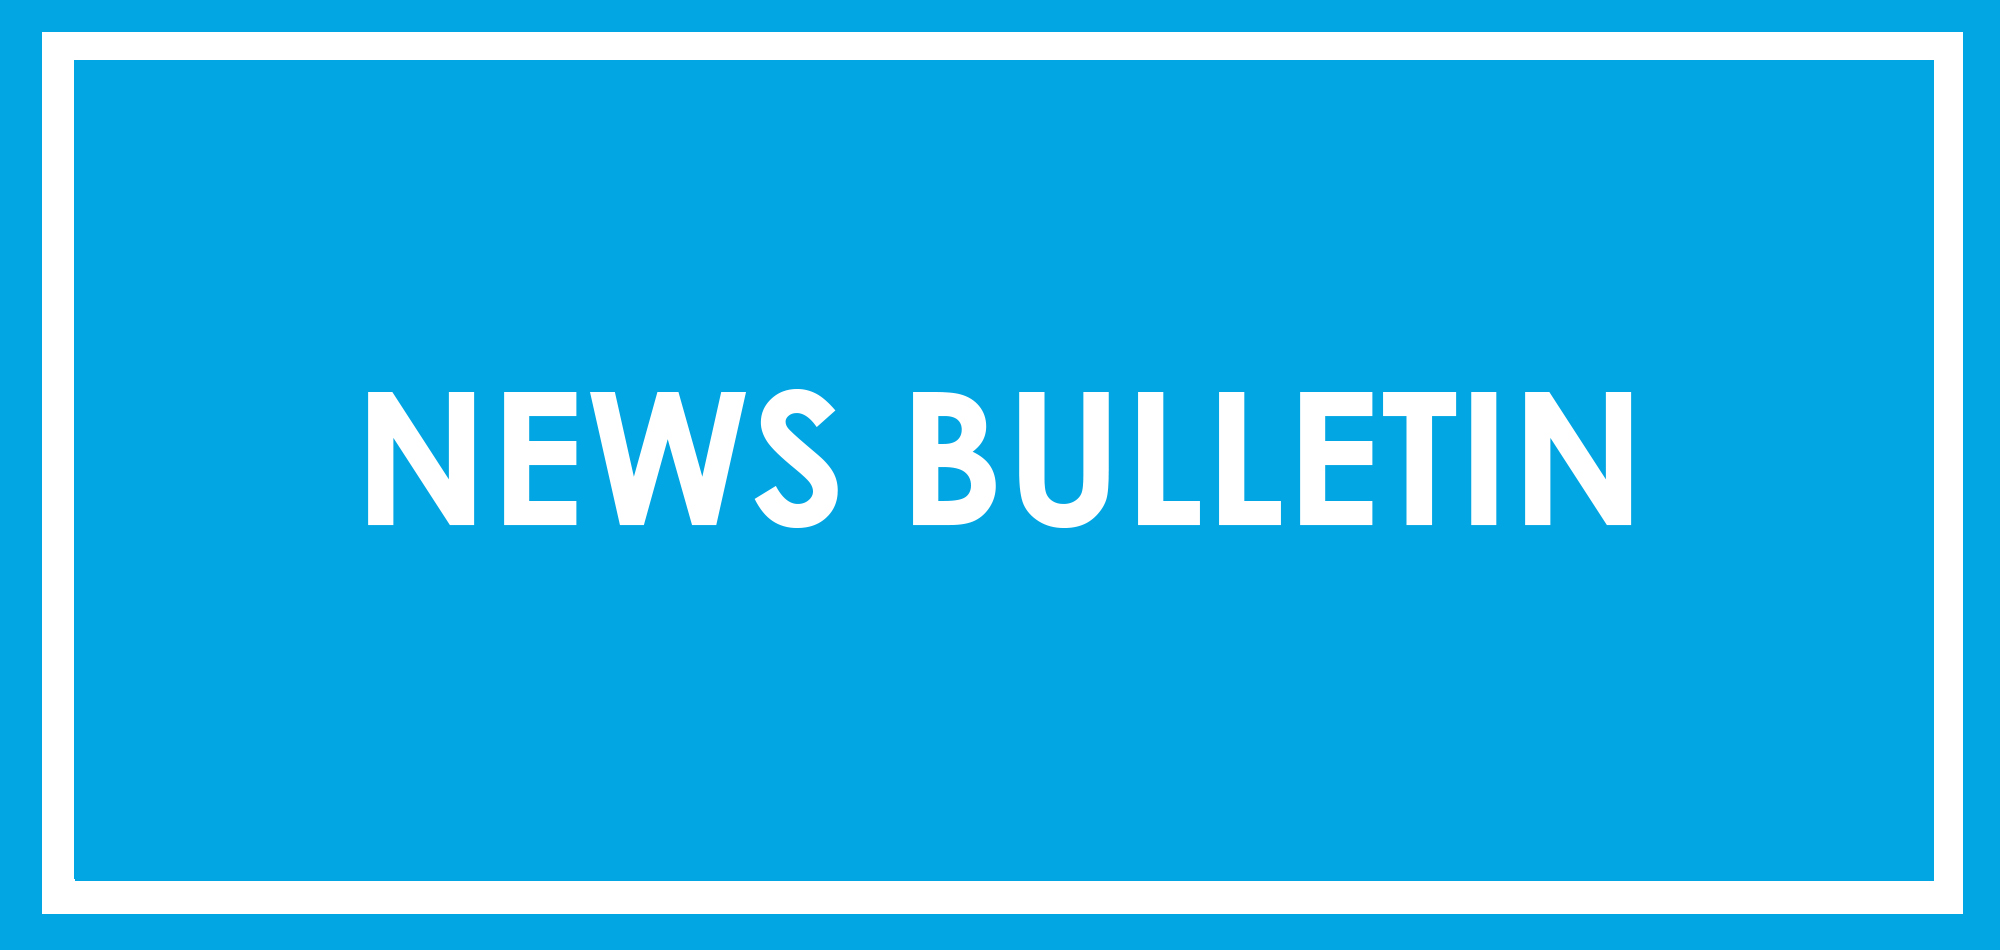 News Bulletin - 04.10.21